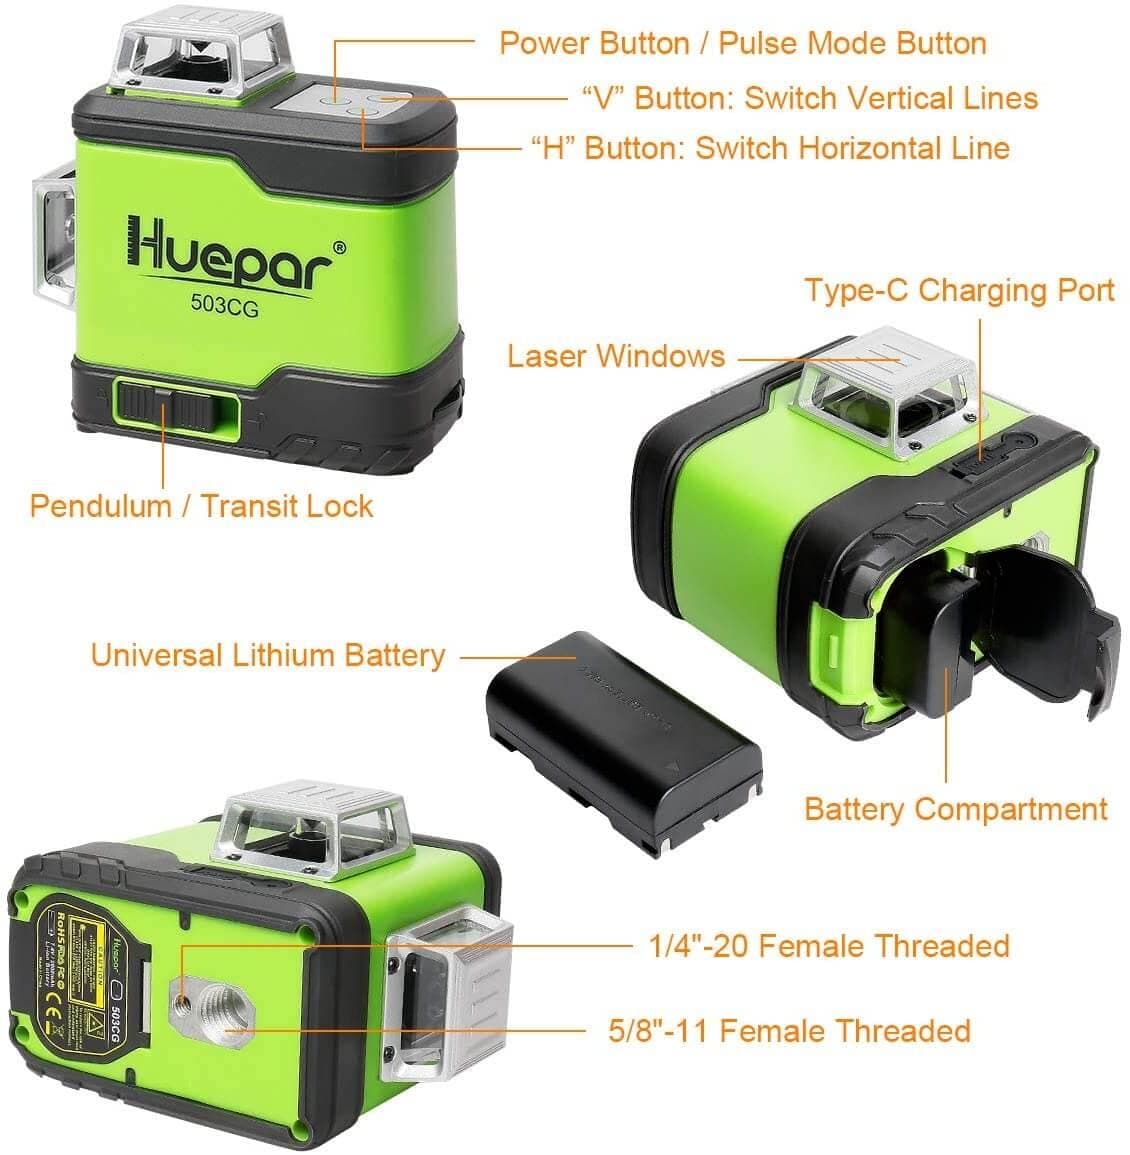 Huepar 503CG - 3D Green Beam Cross Line Self-Leveling Laser Level - HUEPAR US